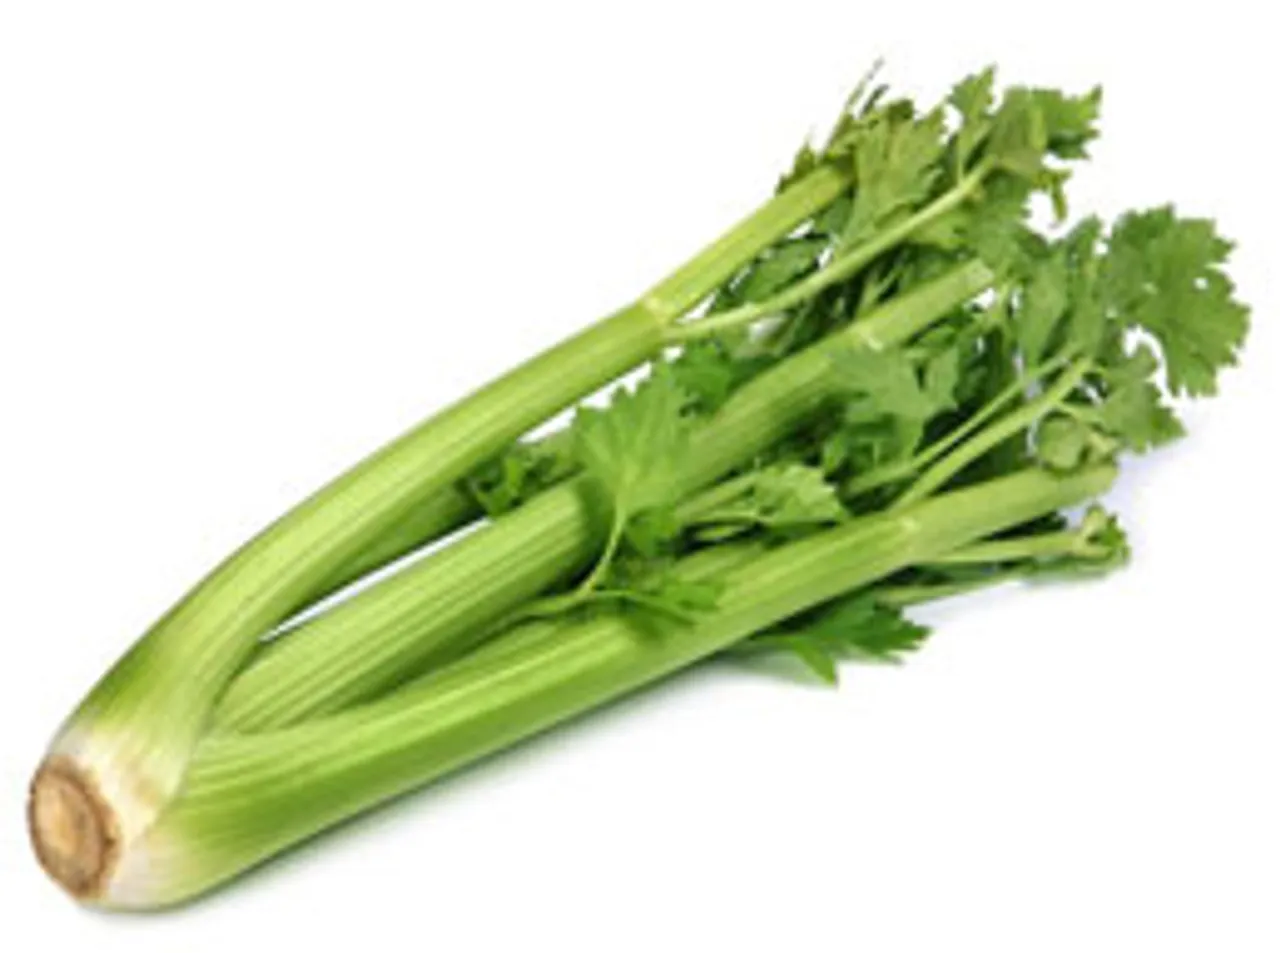 Crunchy munchy celery